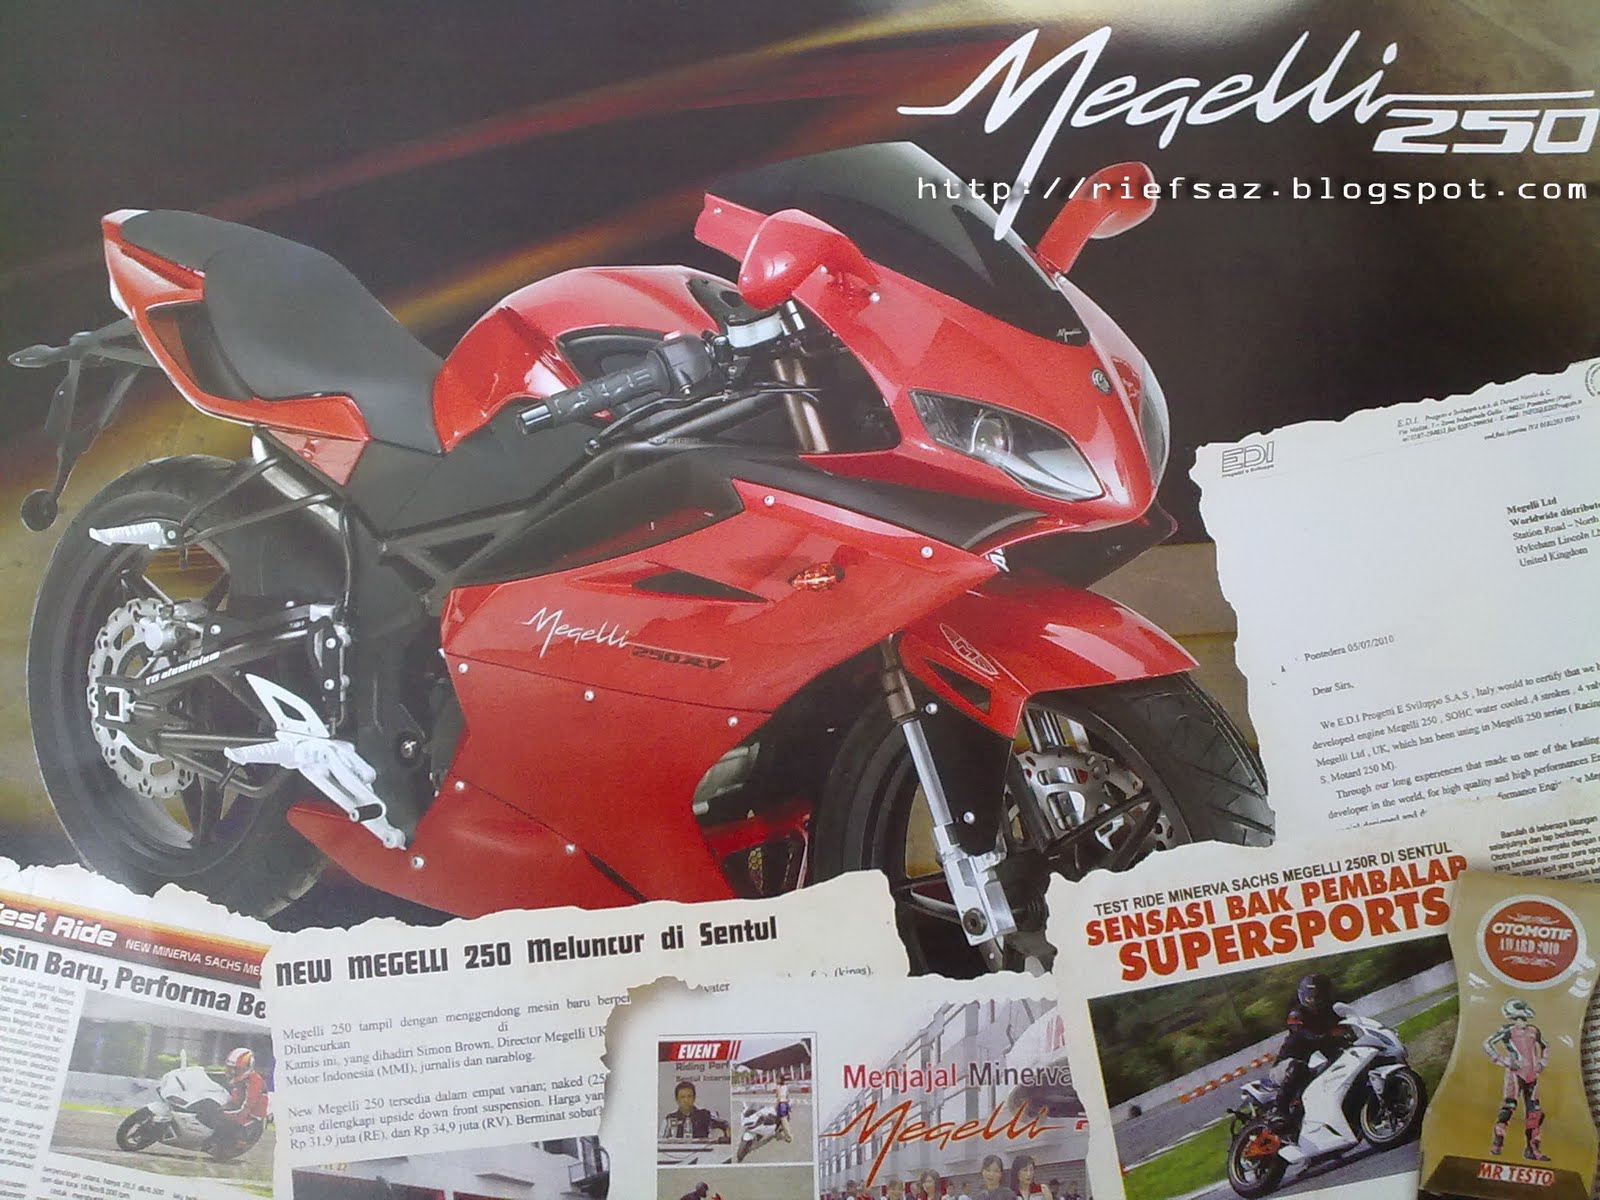 Minerva Vx Modif Ducati - Pecinta Dunia Otomotif